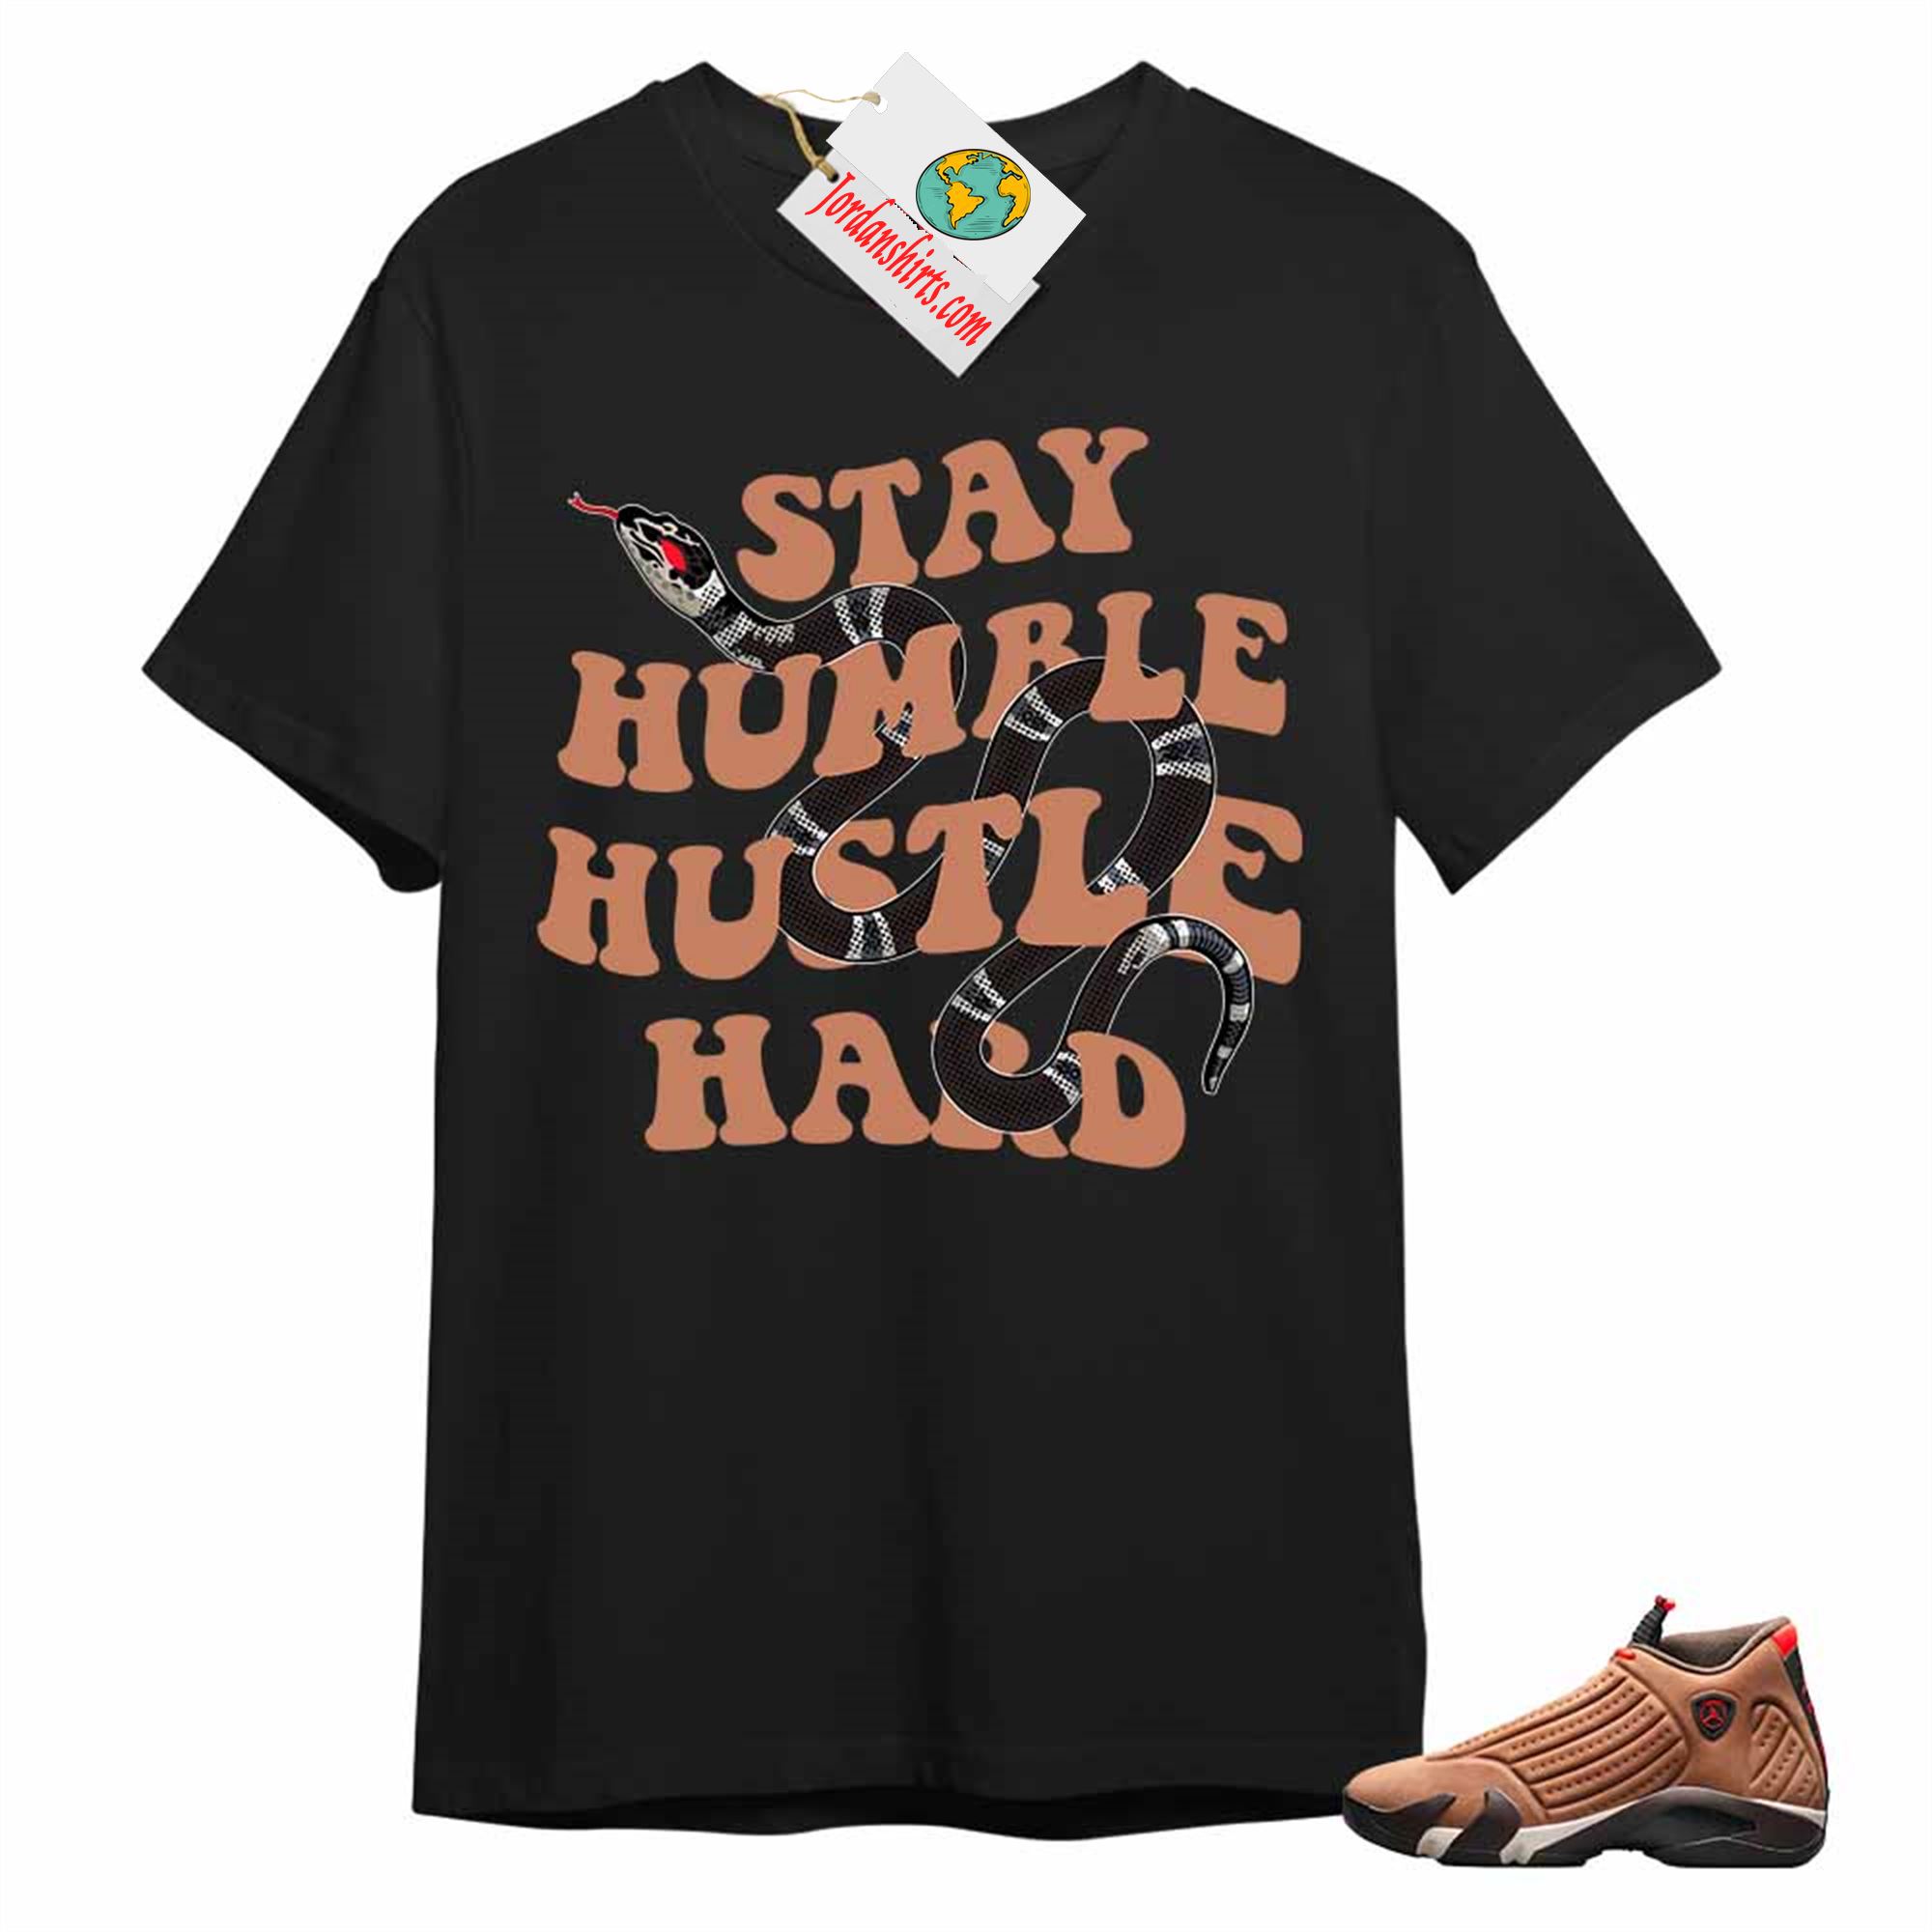 Jordan 14 Shirt, Stay Humble Hustle Hard King Snake Black T-shirt Air Jordan 14 Winterized 14s Full Size Up To 5xl